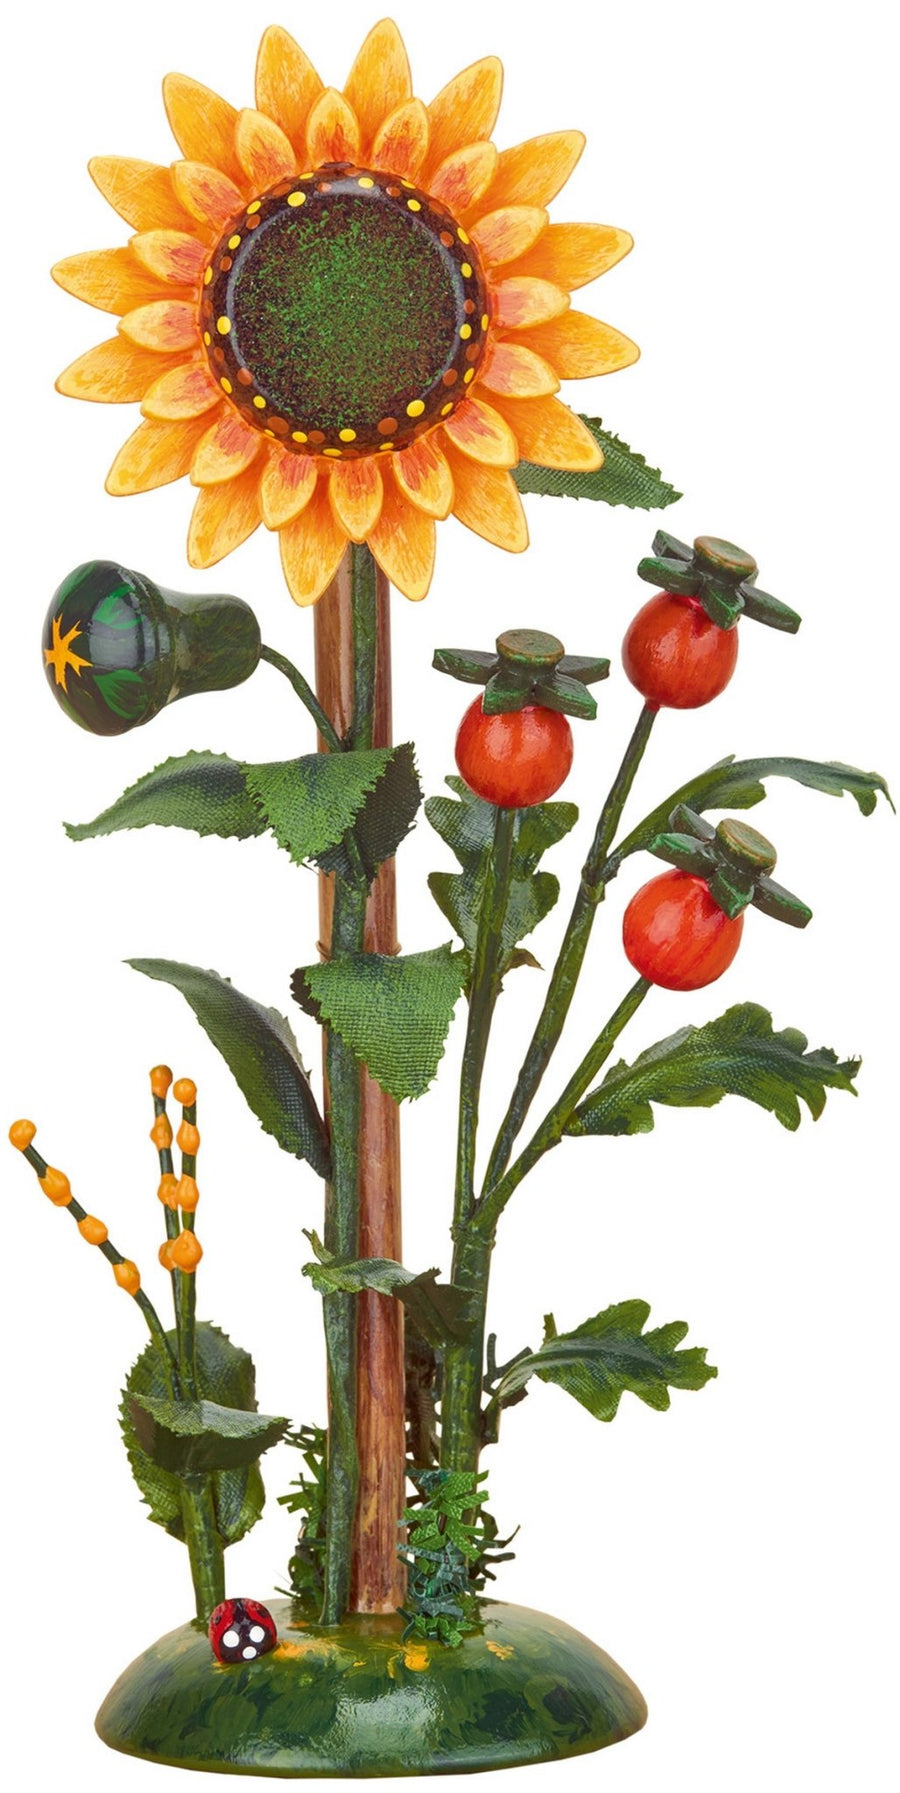 Hubrig Volkskunst 'Blumeninsel Sonnenblume 14cm'-HUB-307h0053